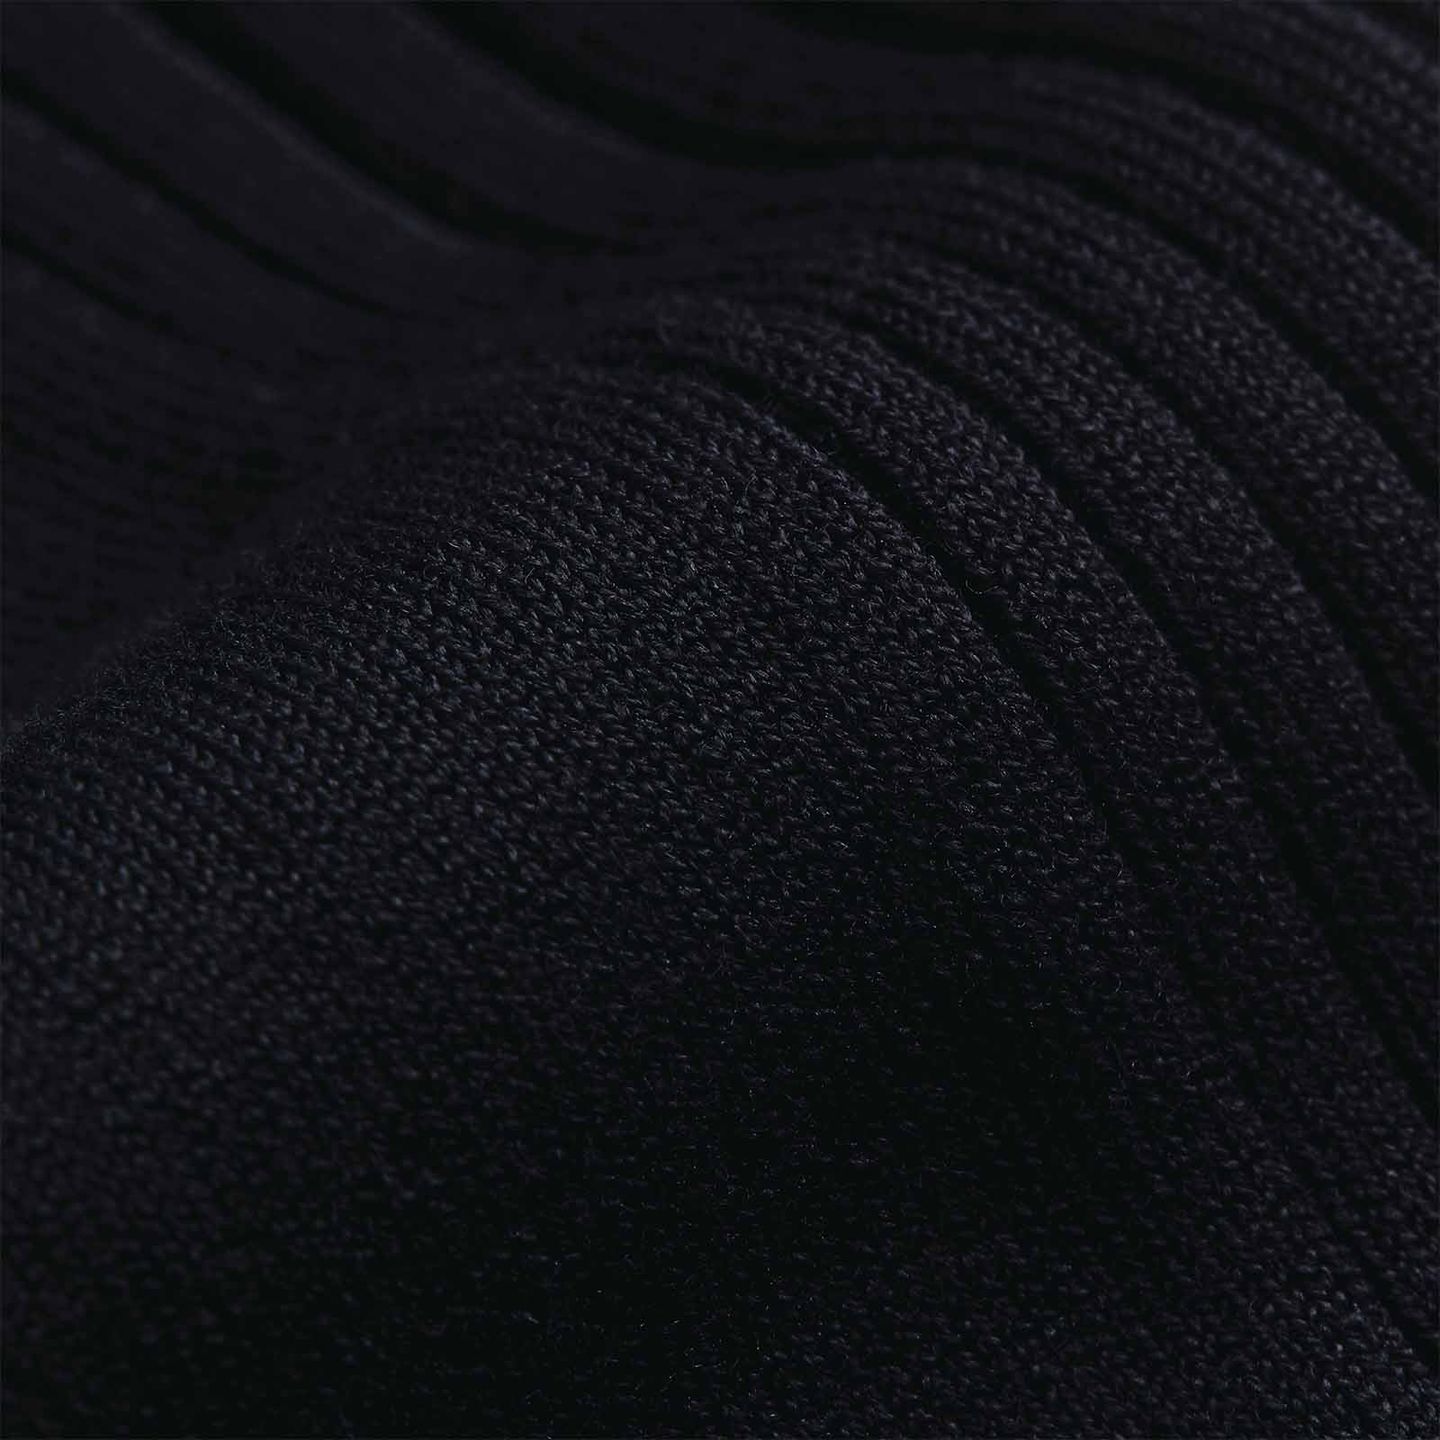 A close up of black socks